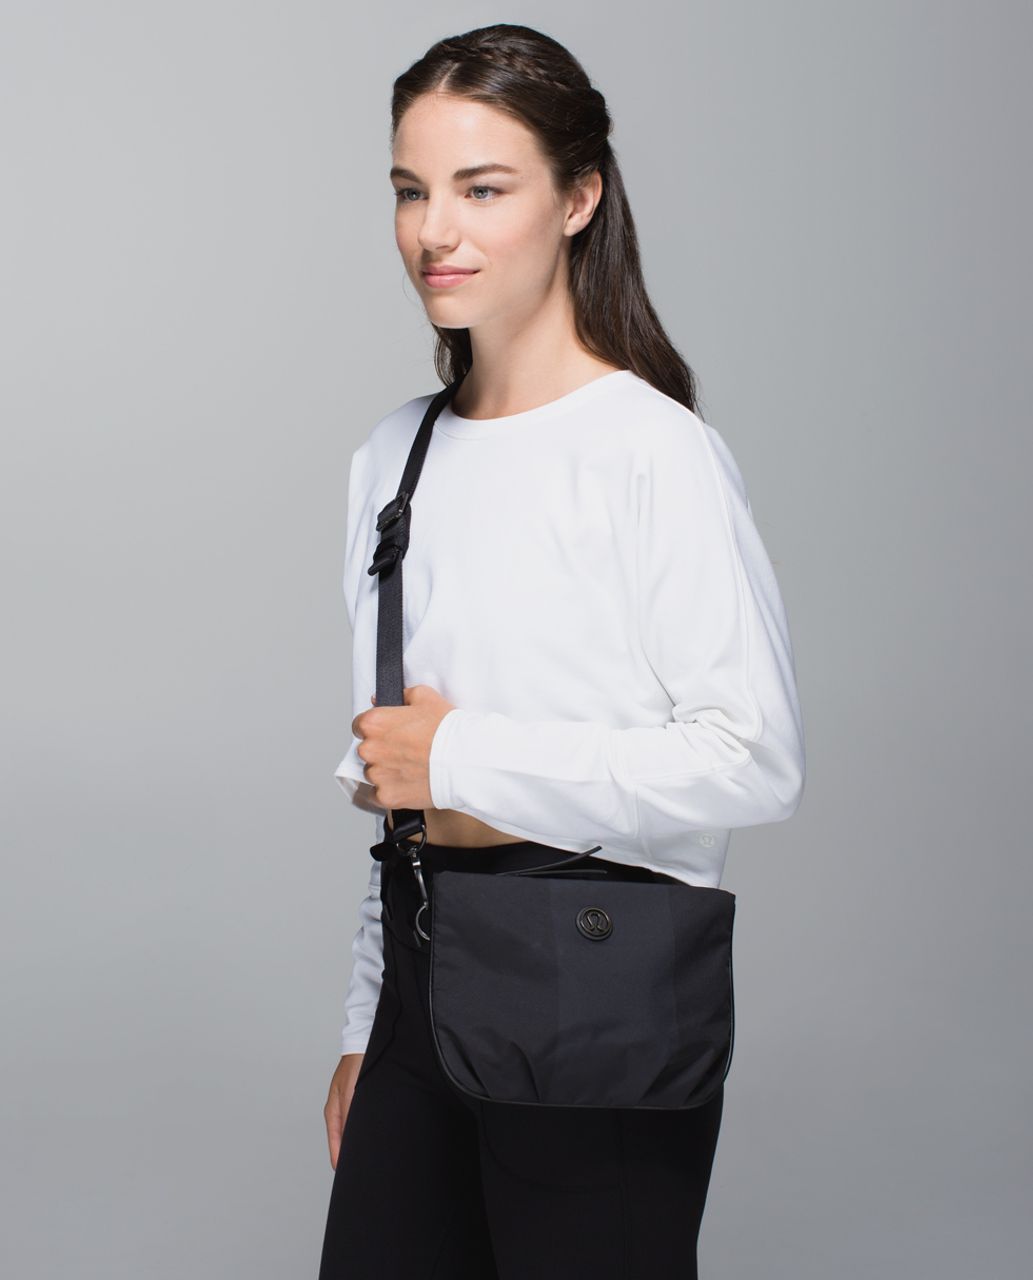 Lululemon Back to Class Backpack - Bold Stripe Vertical Deep Coal Black